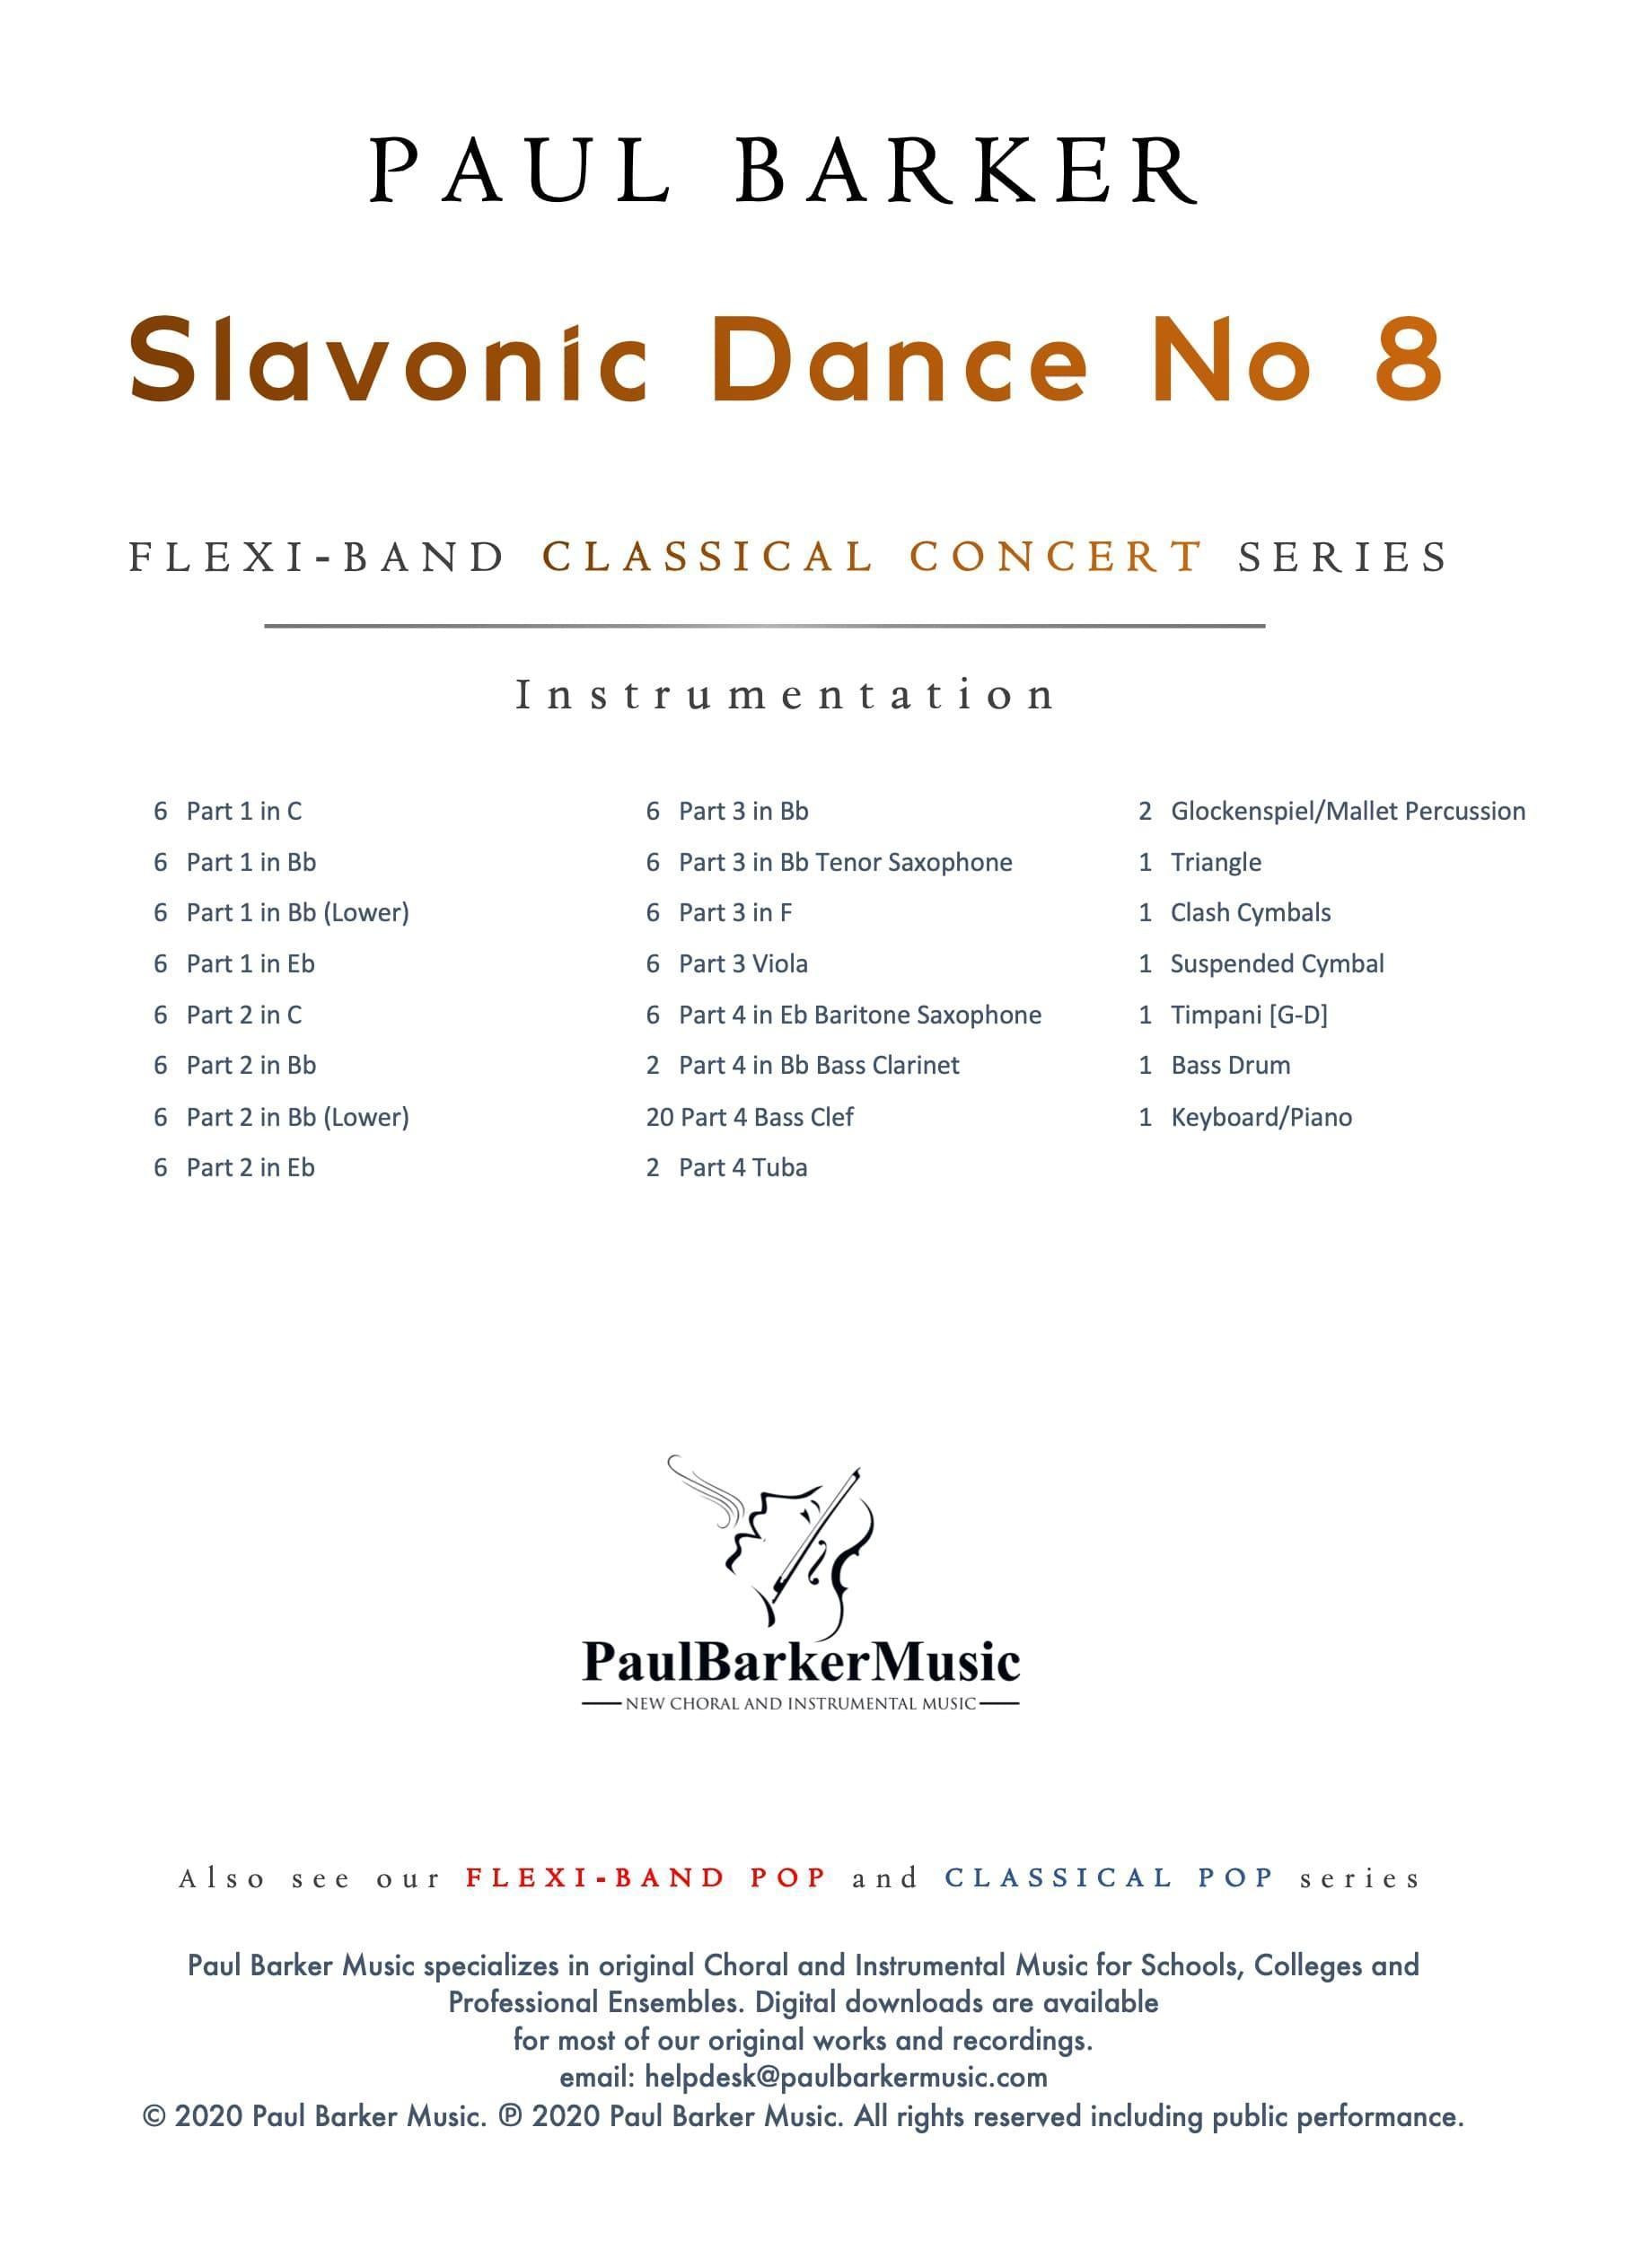 Slavonic Dance No 8 In G Minor - Paul Barker Music 